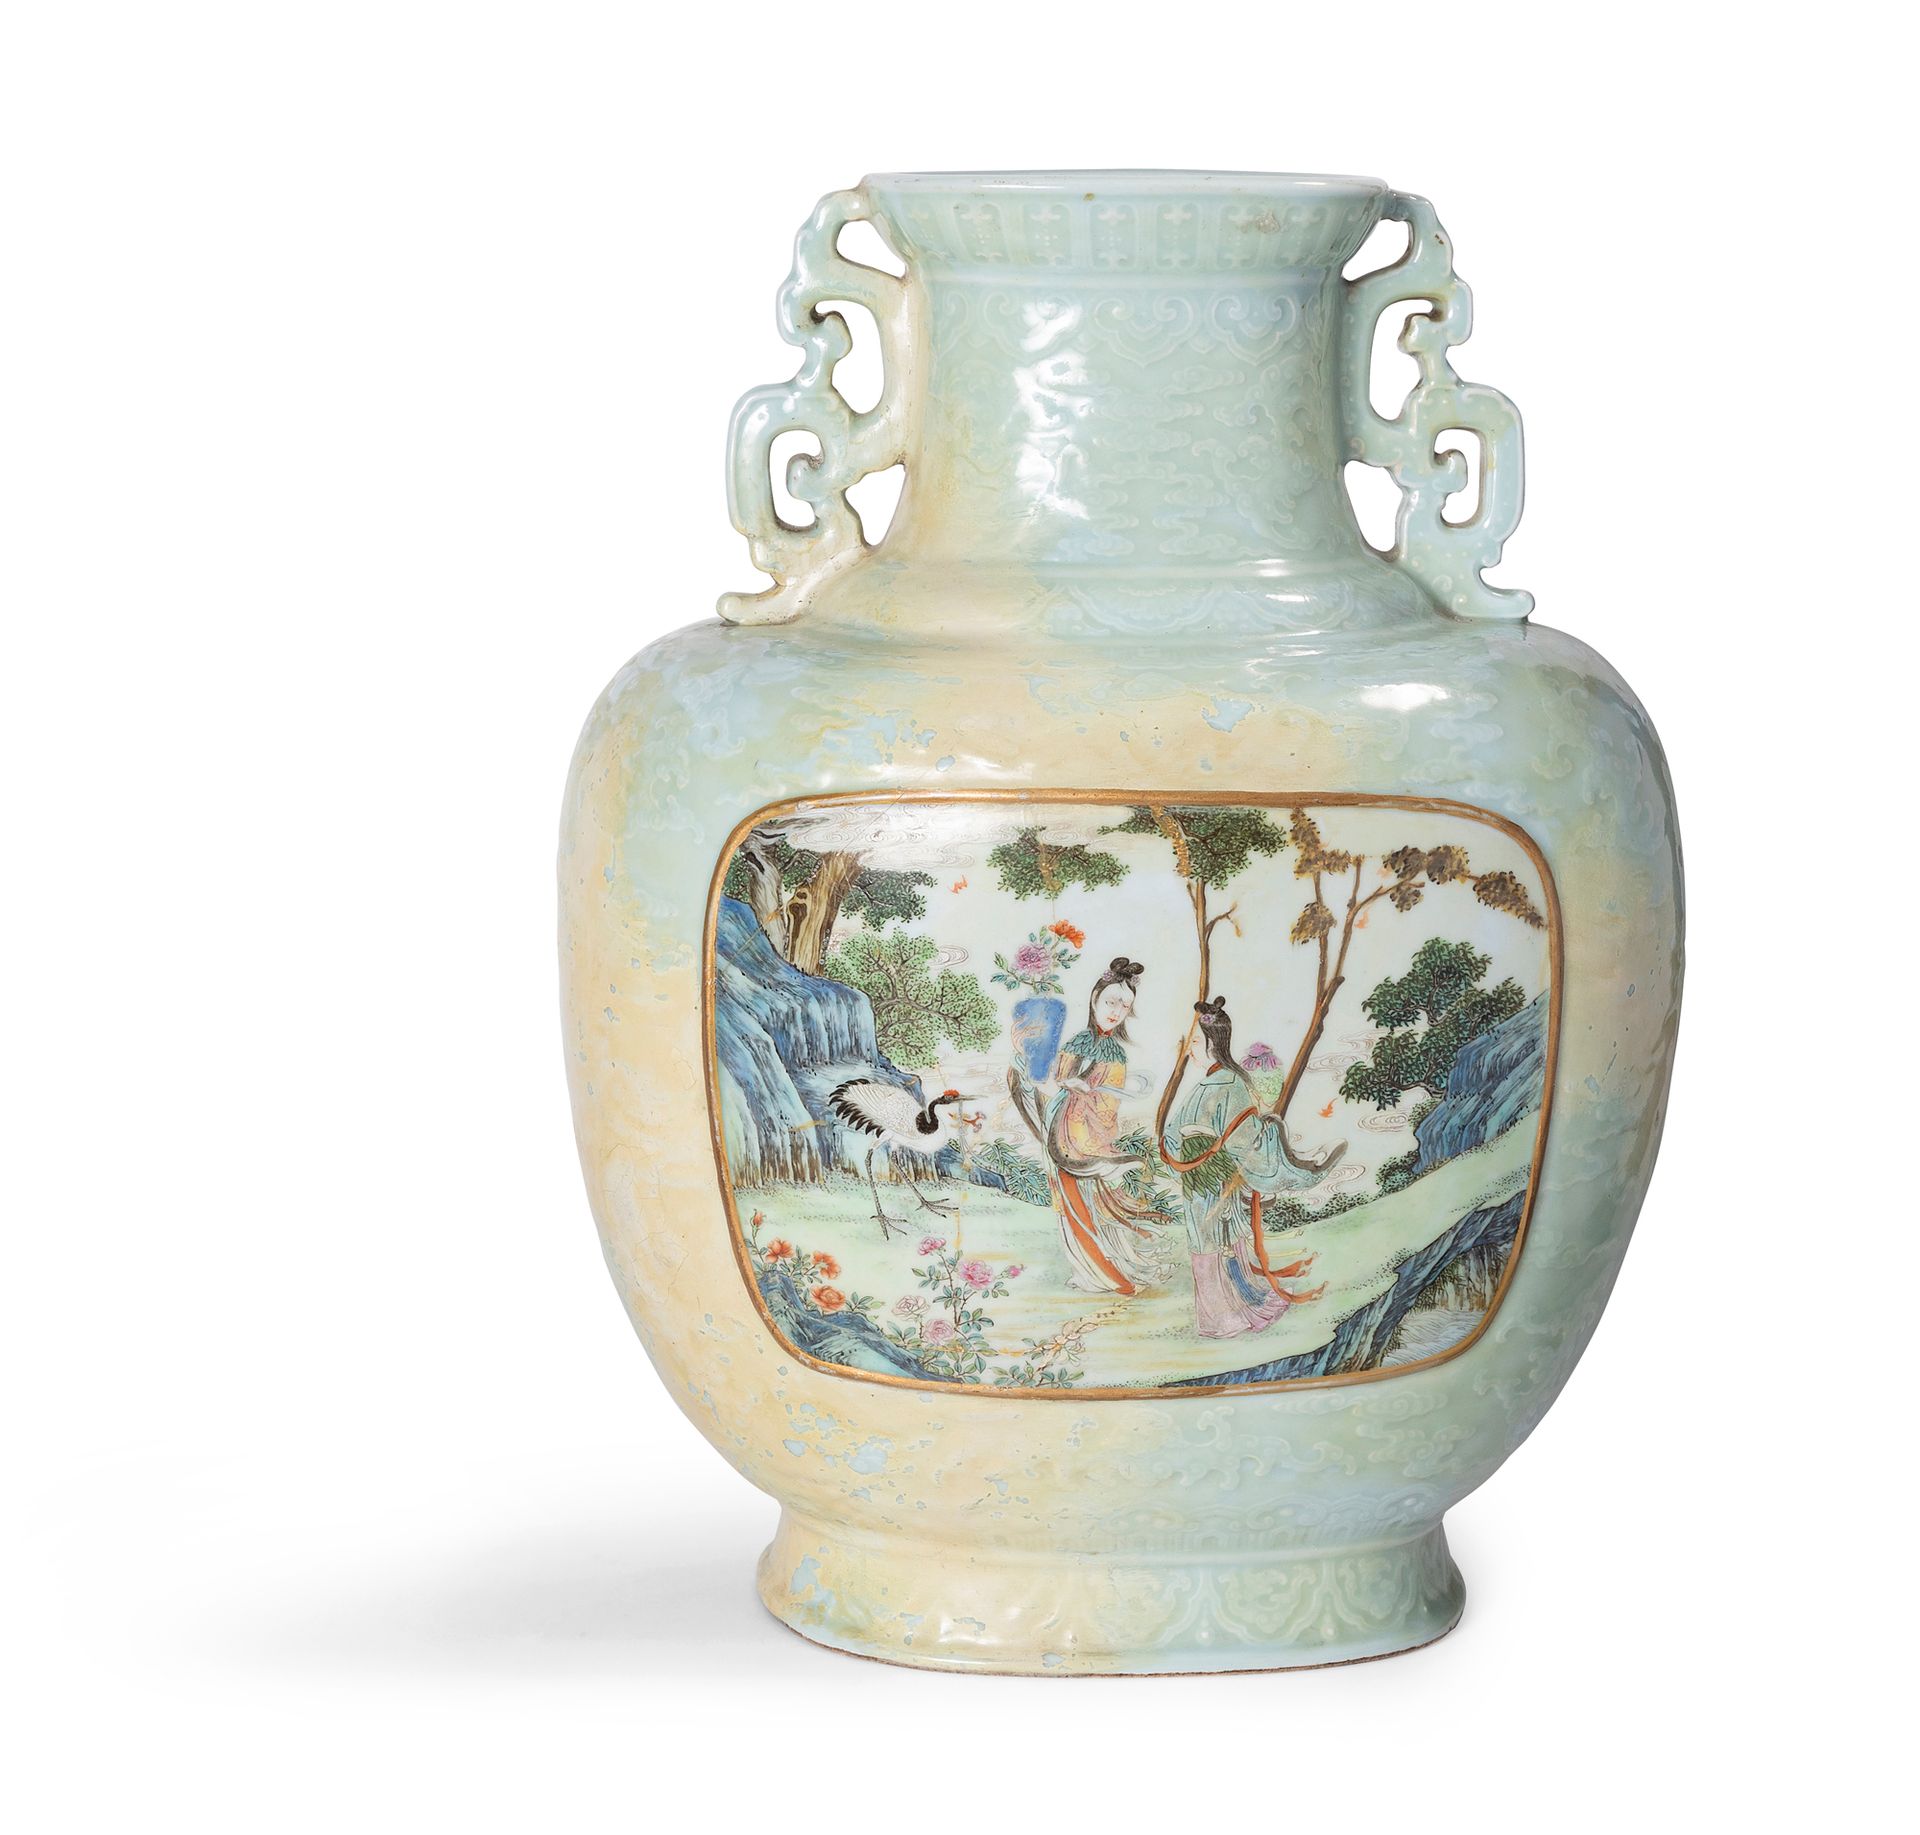 Null China, 18. Jahrhundert

Jahrhundert, Hu-förmige Porzellanvase mit einem Dek&hellip;